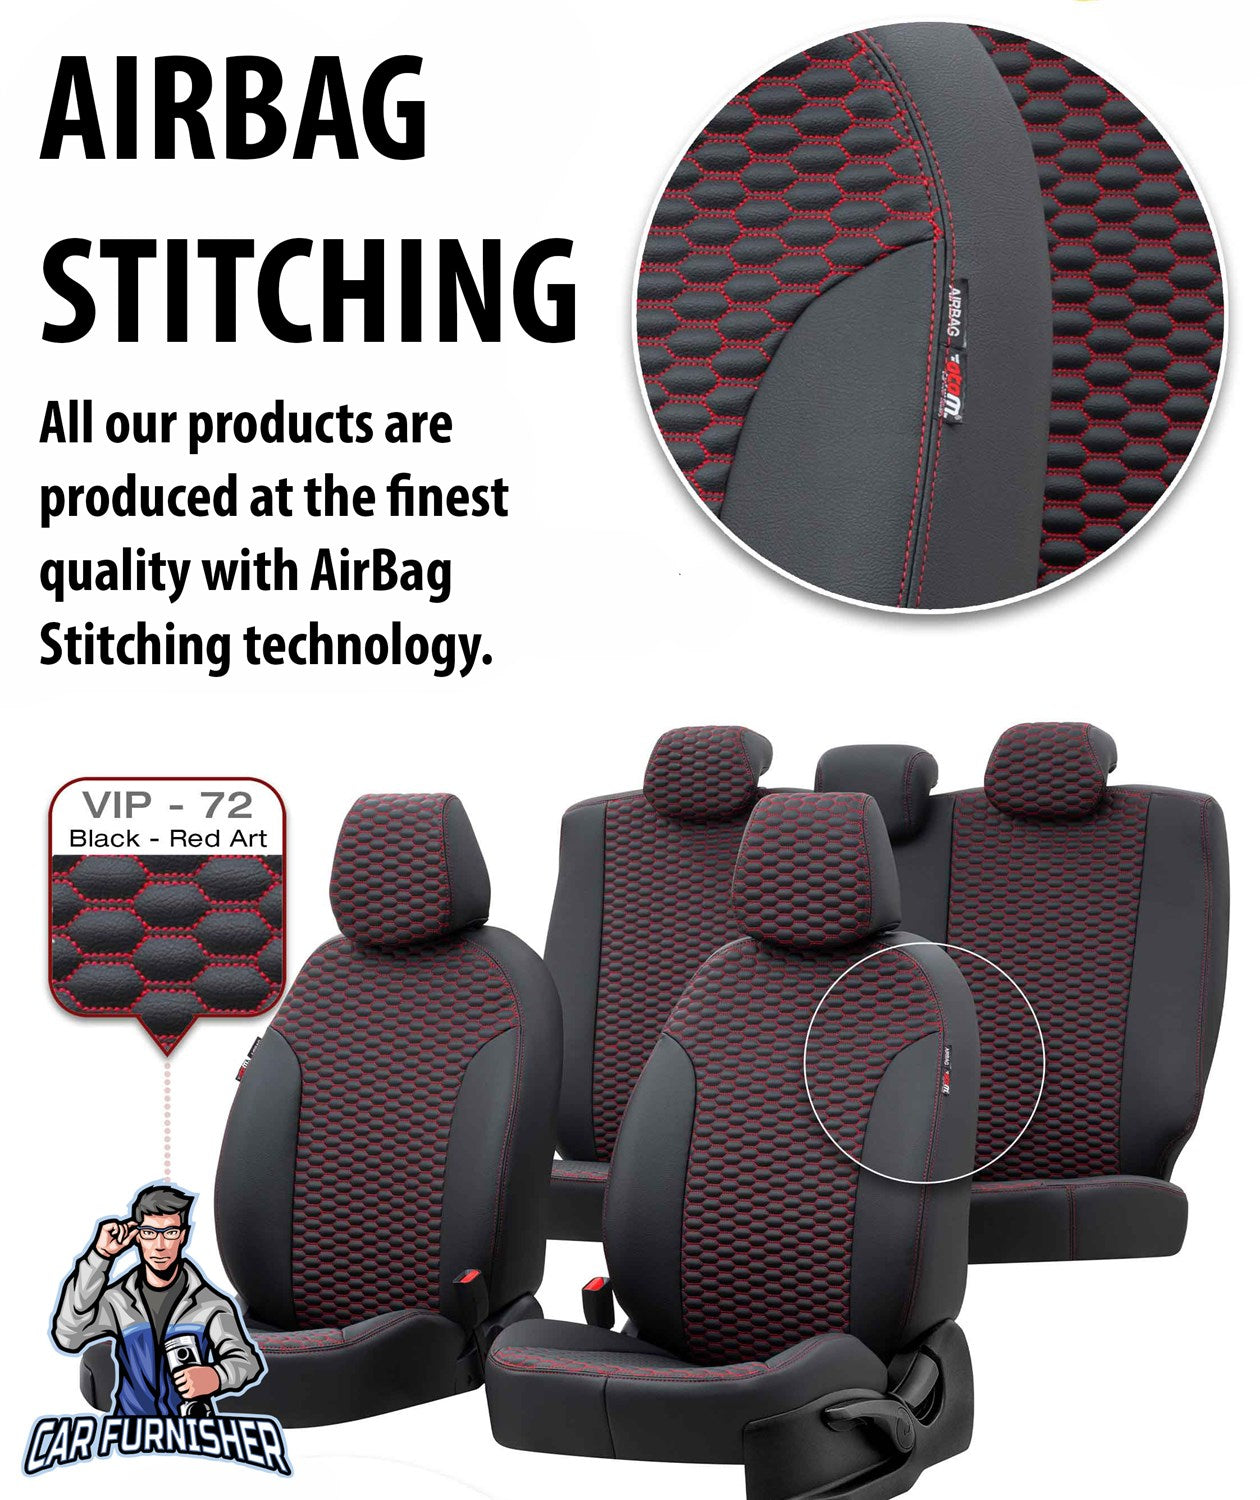 Alfa Romeo 147 Seat Covers Tokyo Leather Design Ivory Leather